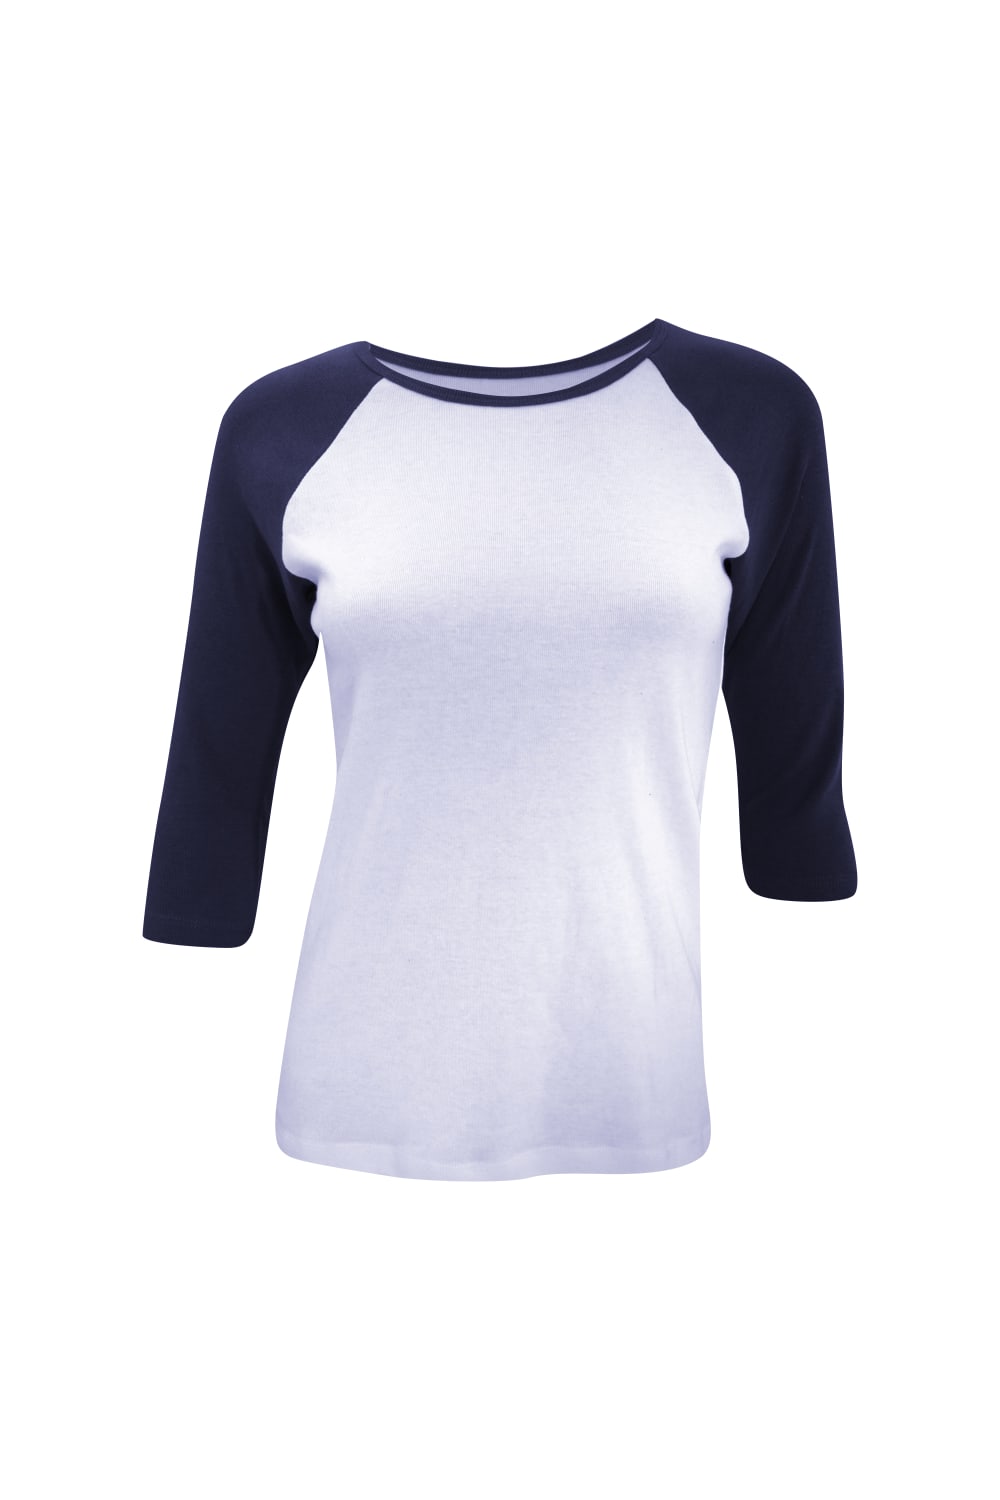 Bella Ladies/Womens 3/4 Sleeve Contrast Long Sleeve T-Shirt (White/Navy)